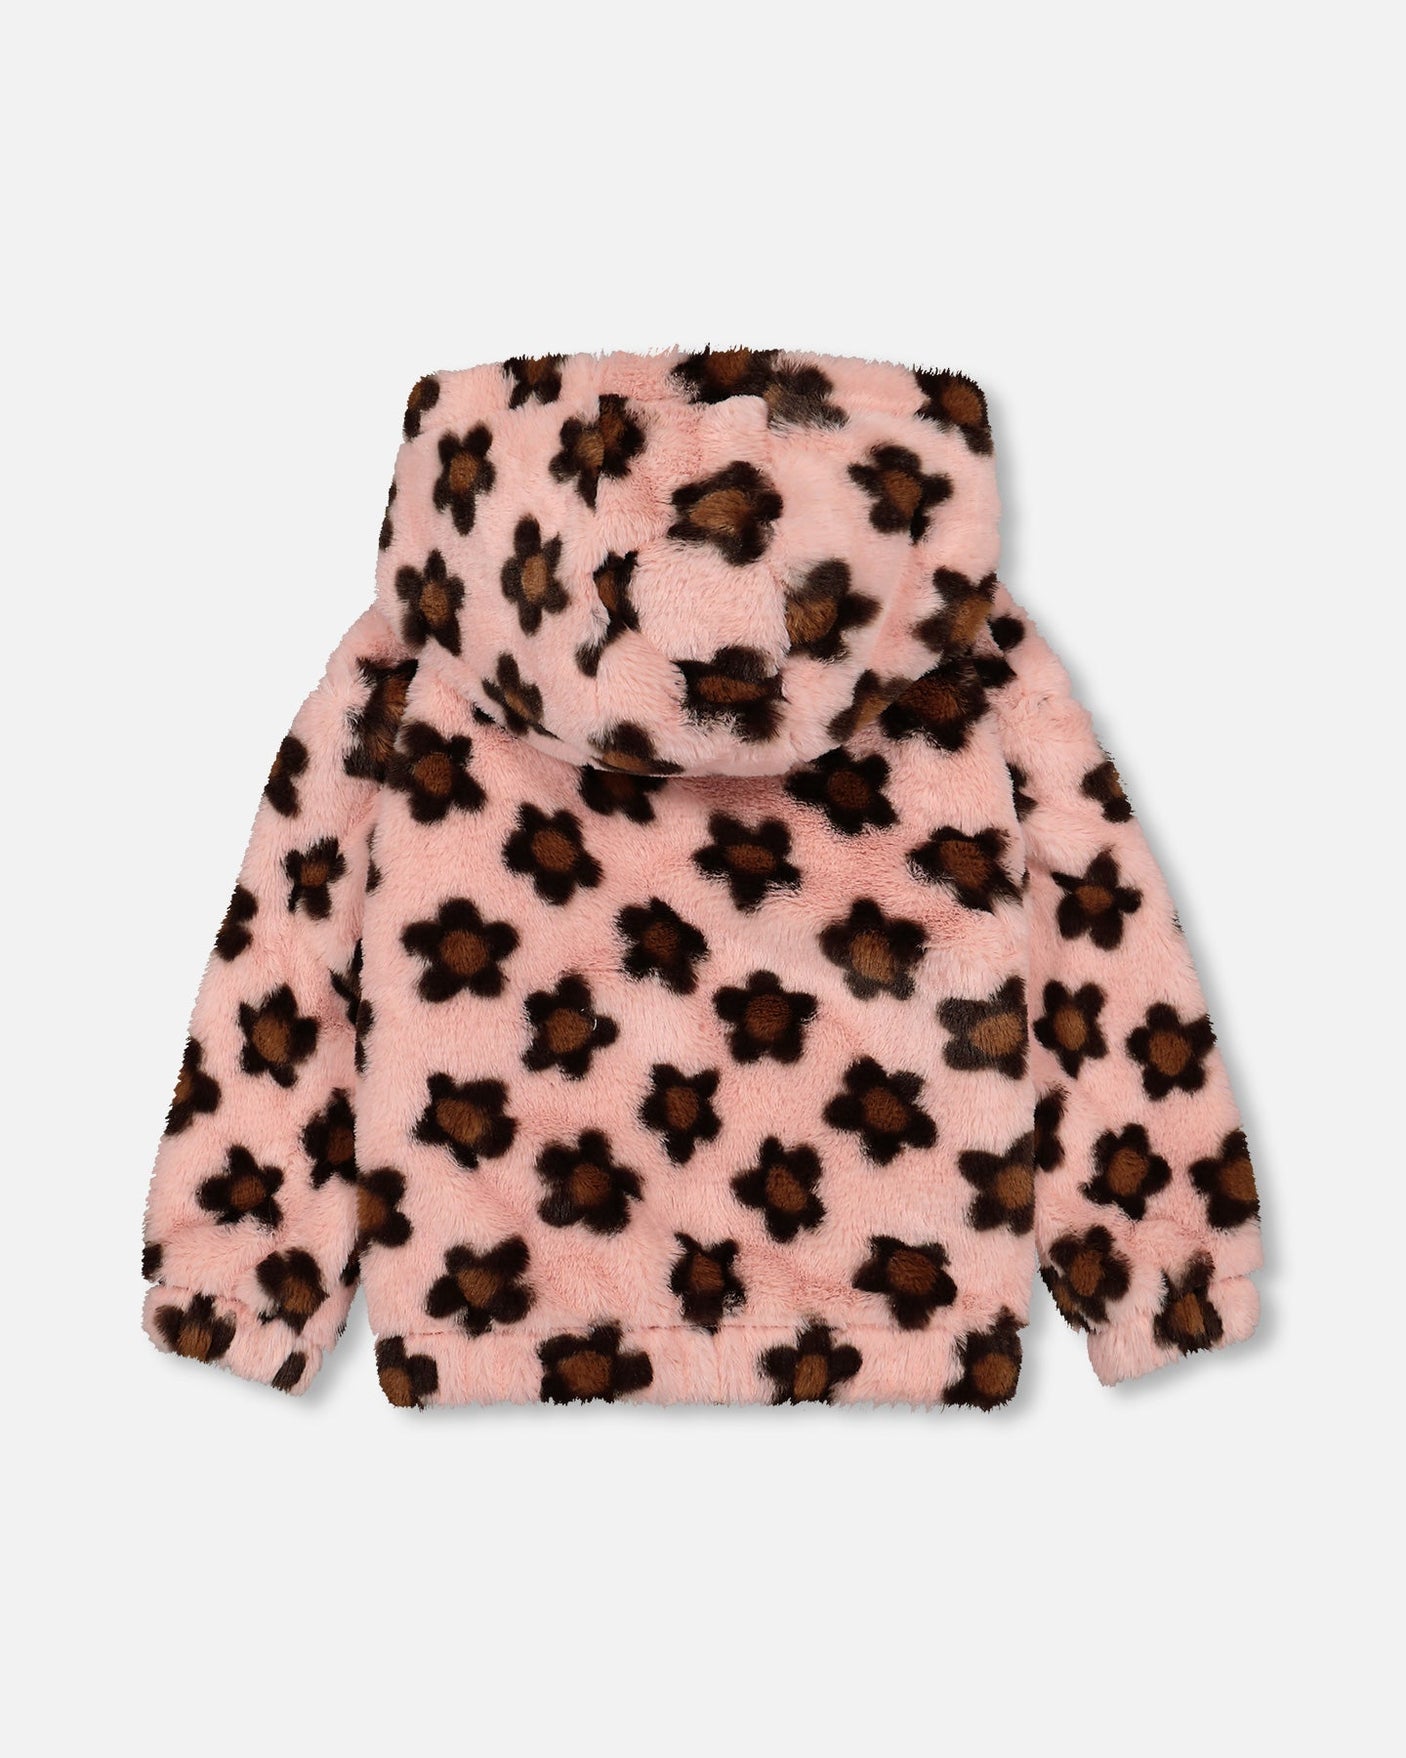 Faux Fur Hooded Jacket Pink Printed With Brown Flowers-2